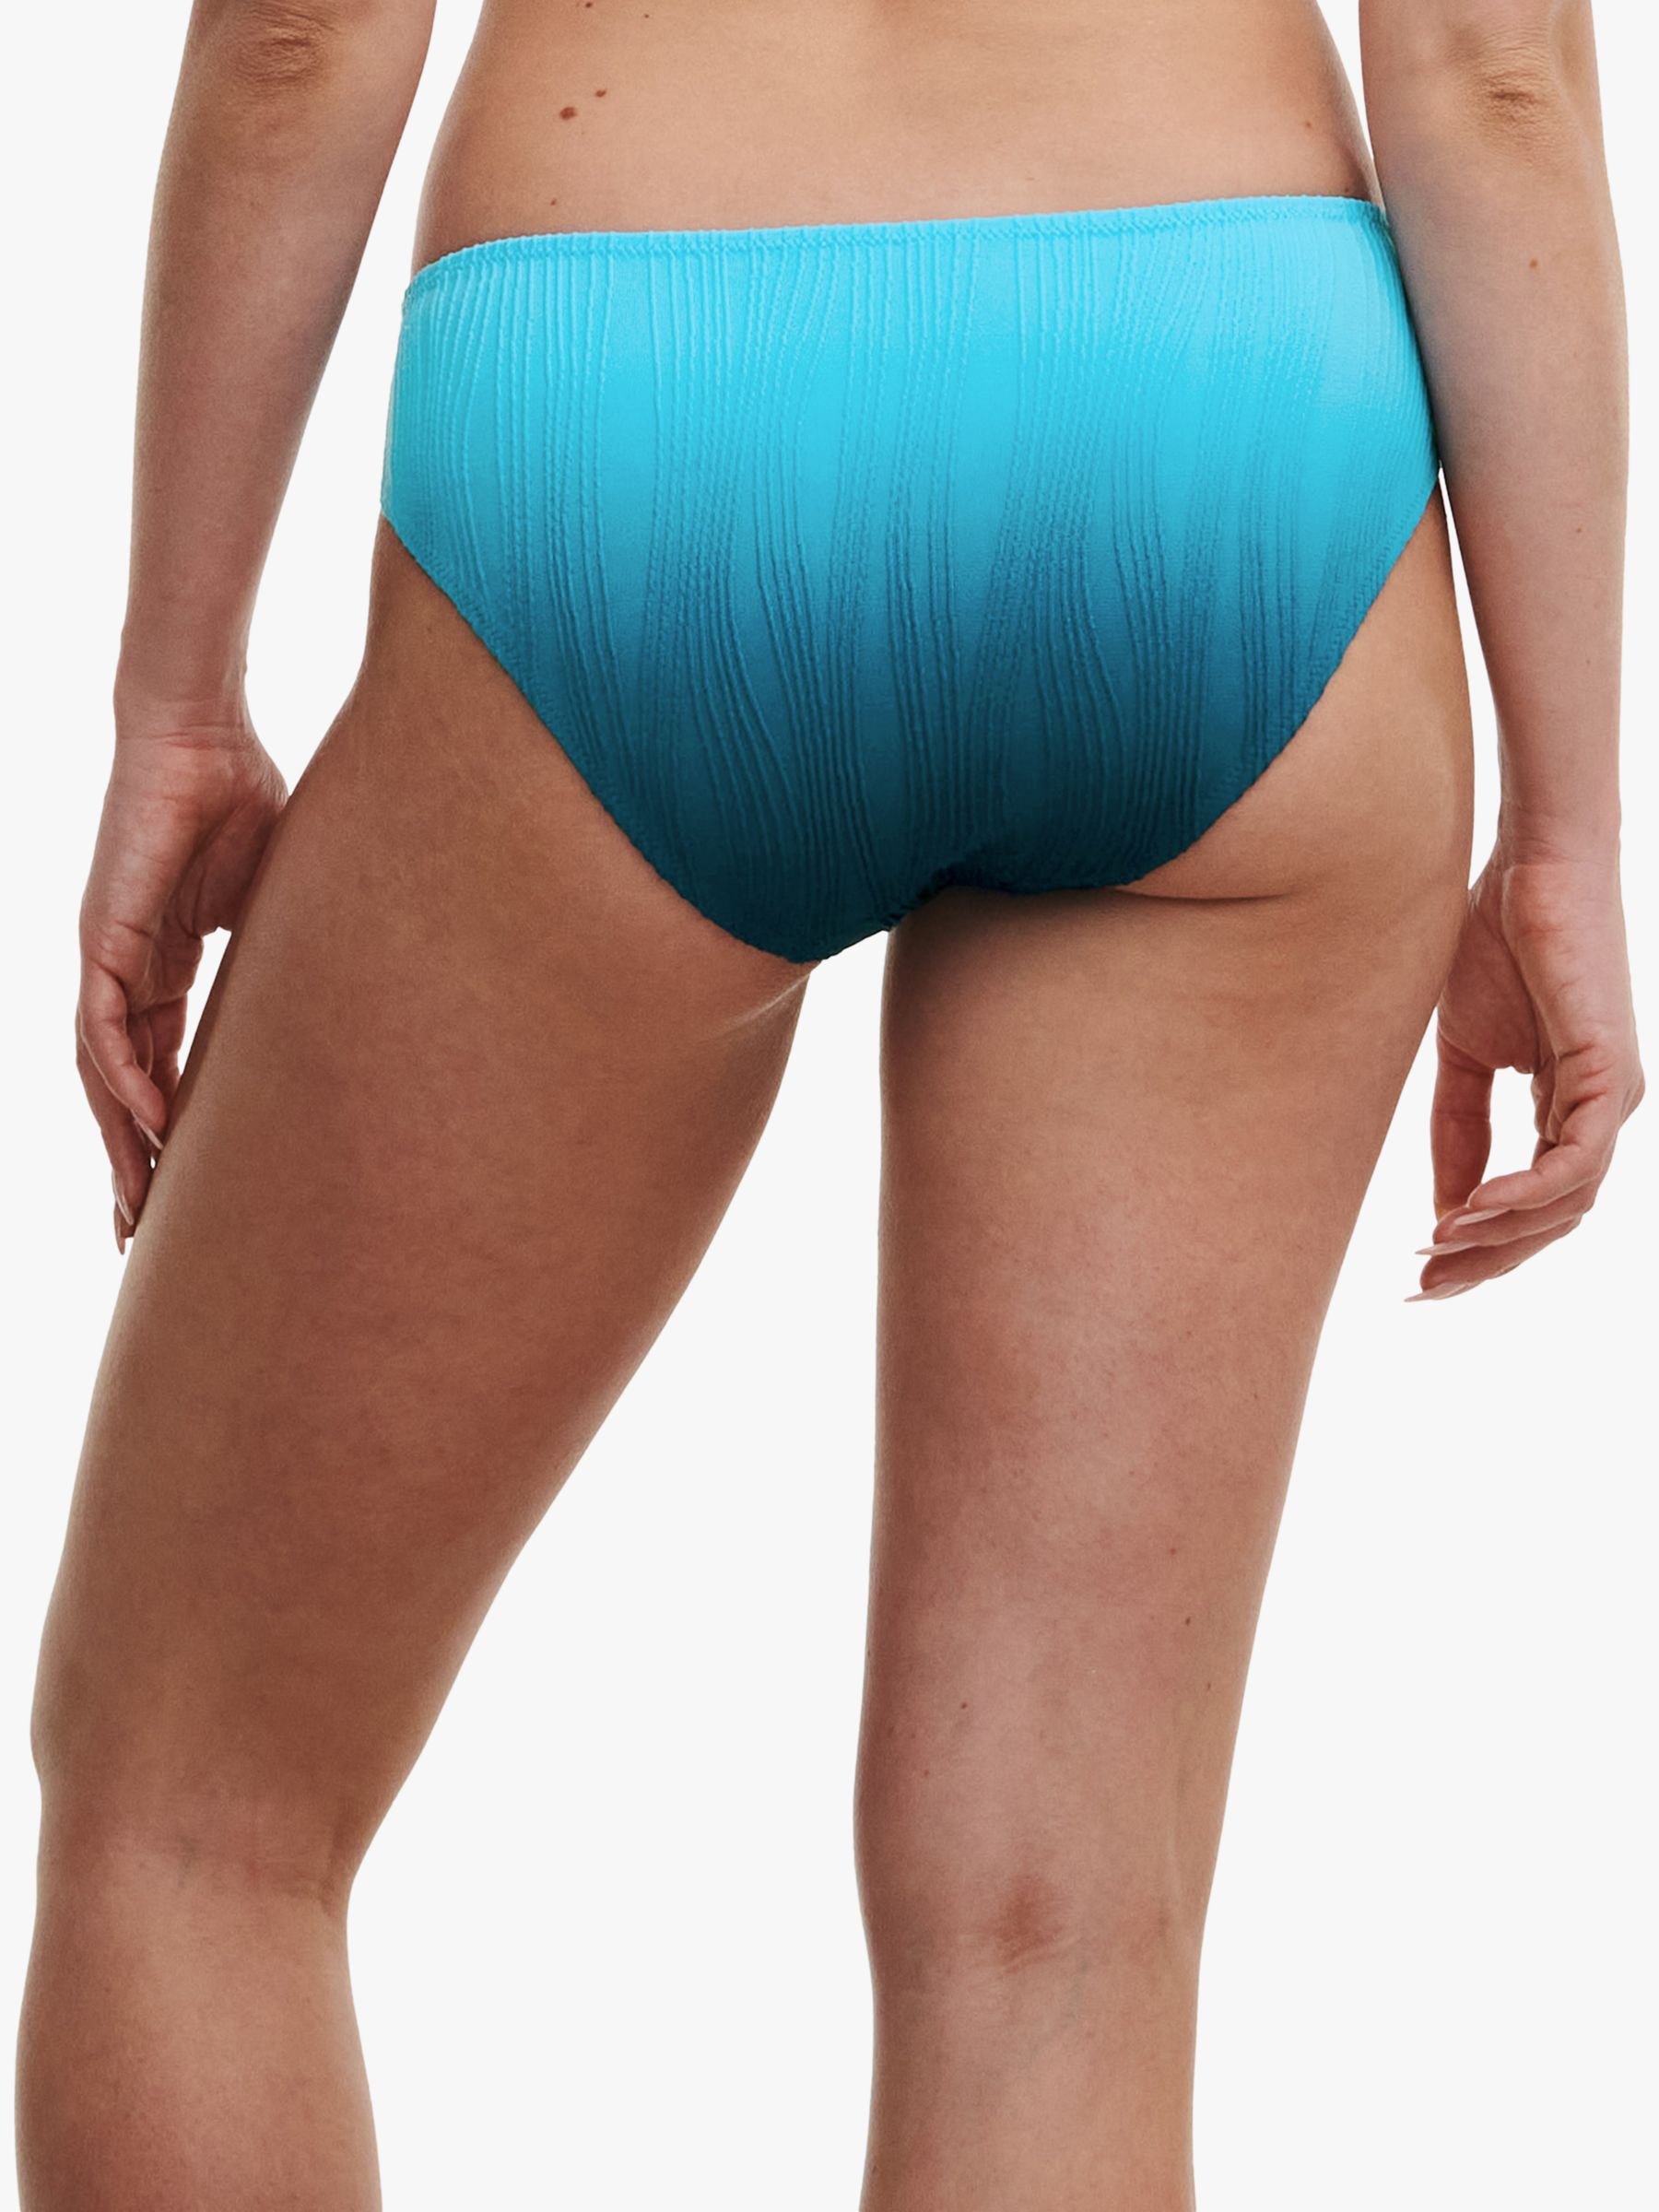 Chantelle Pulp Swimwear Textured Bikini Bottoms, Blue Tie Dye, One Size